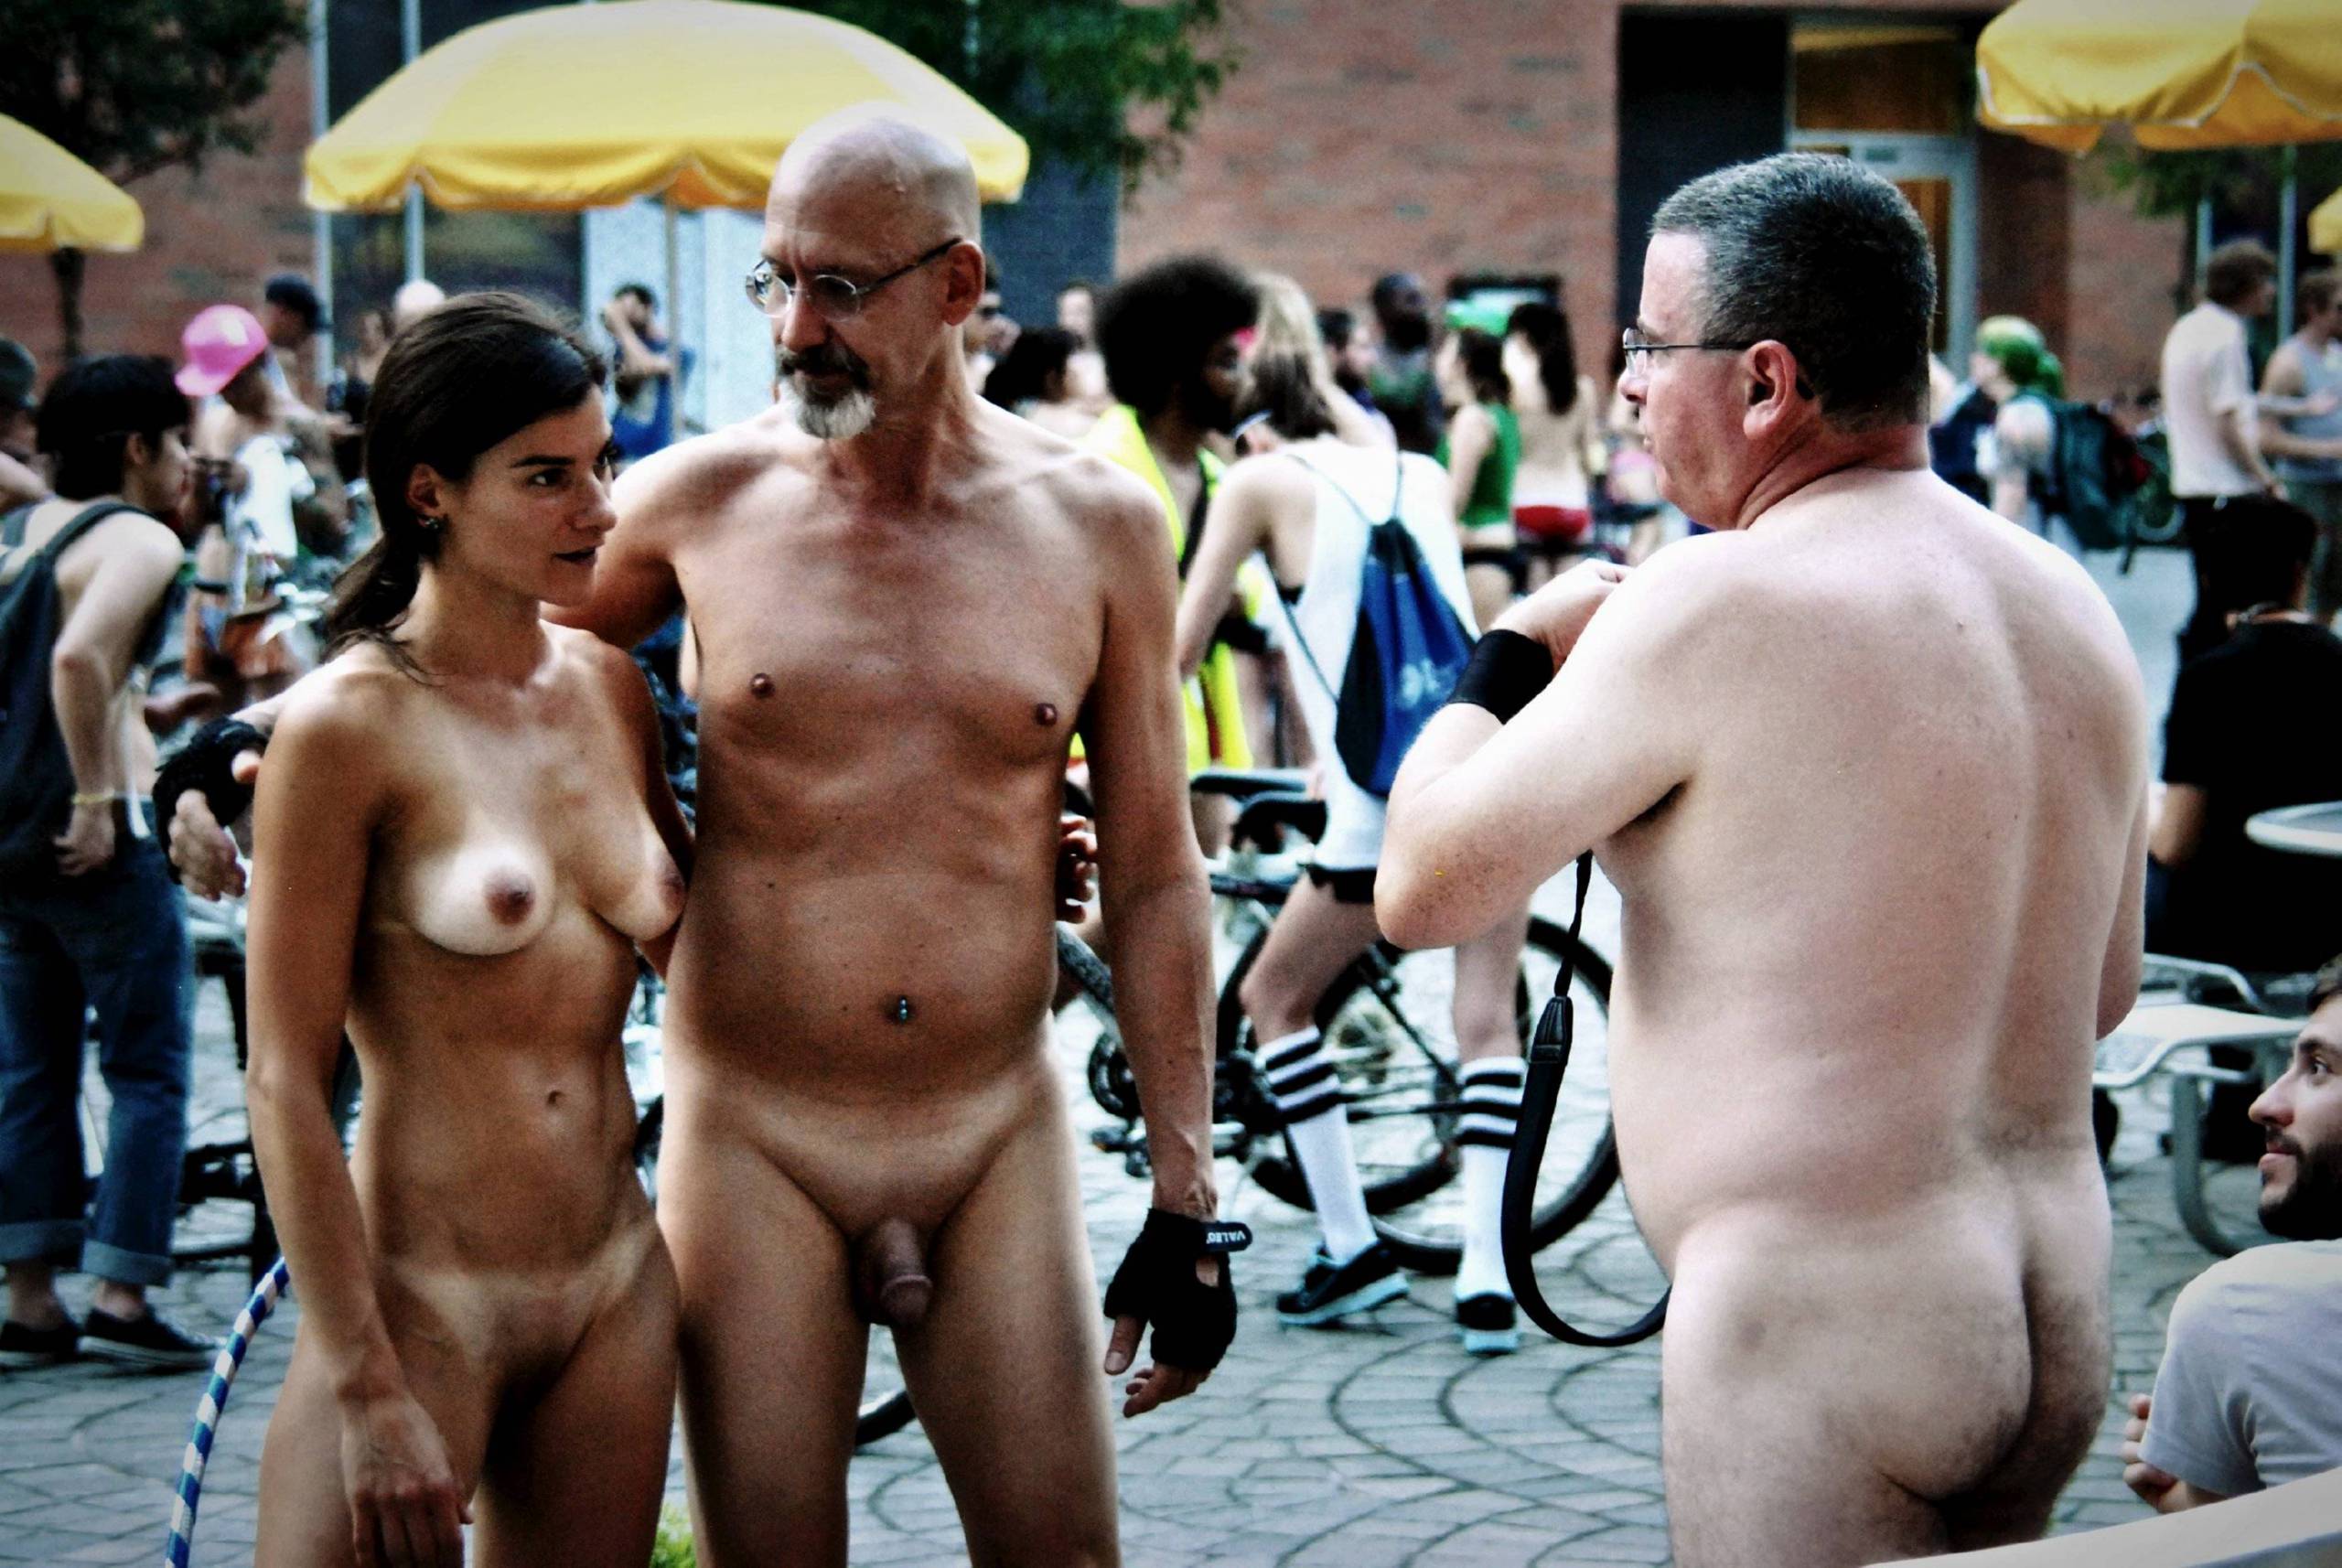 Other Nudist Pics World Naked Bike Ride [WNBR] UK 2011 - 2